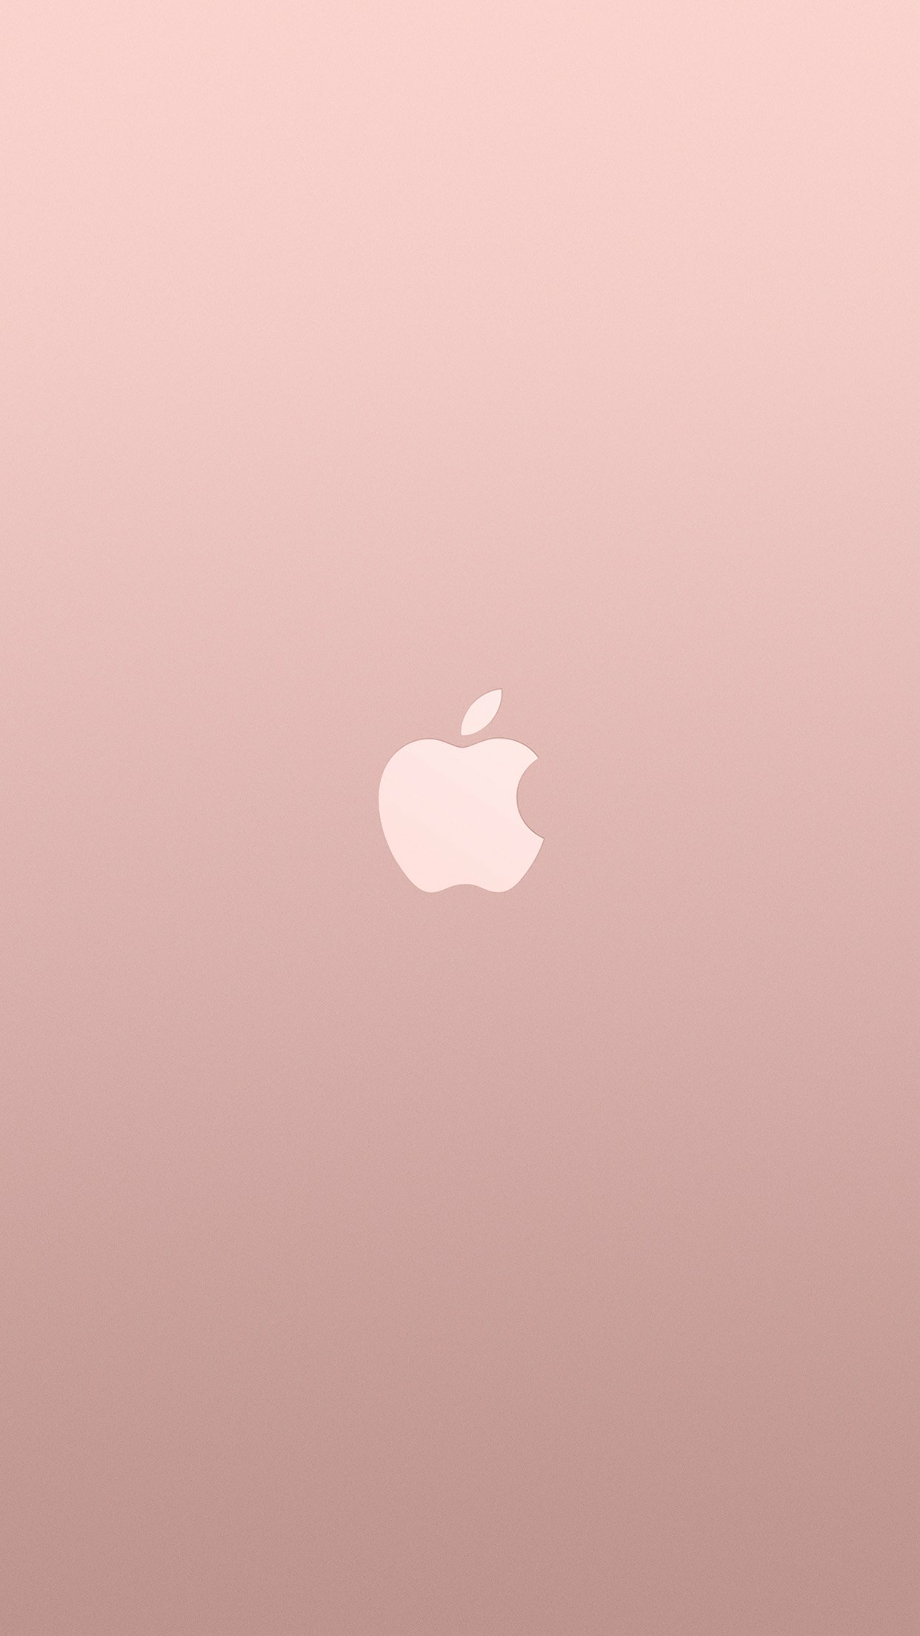 iphone logo pink